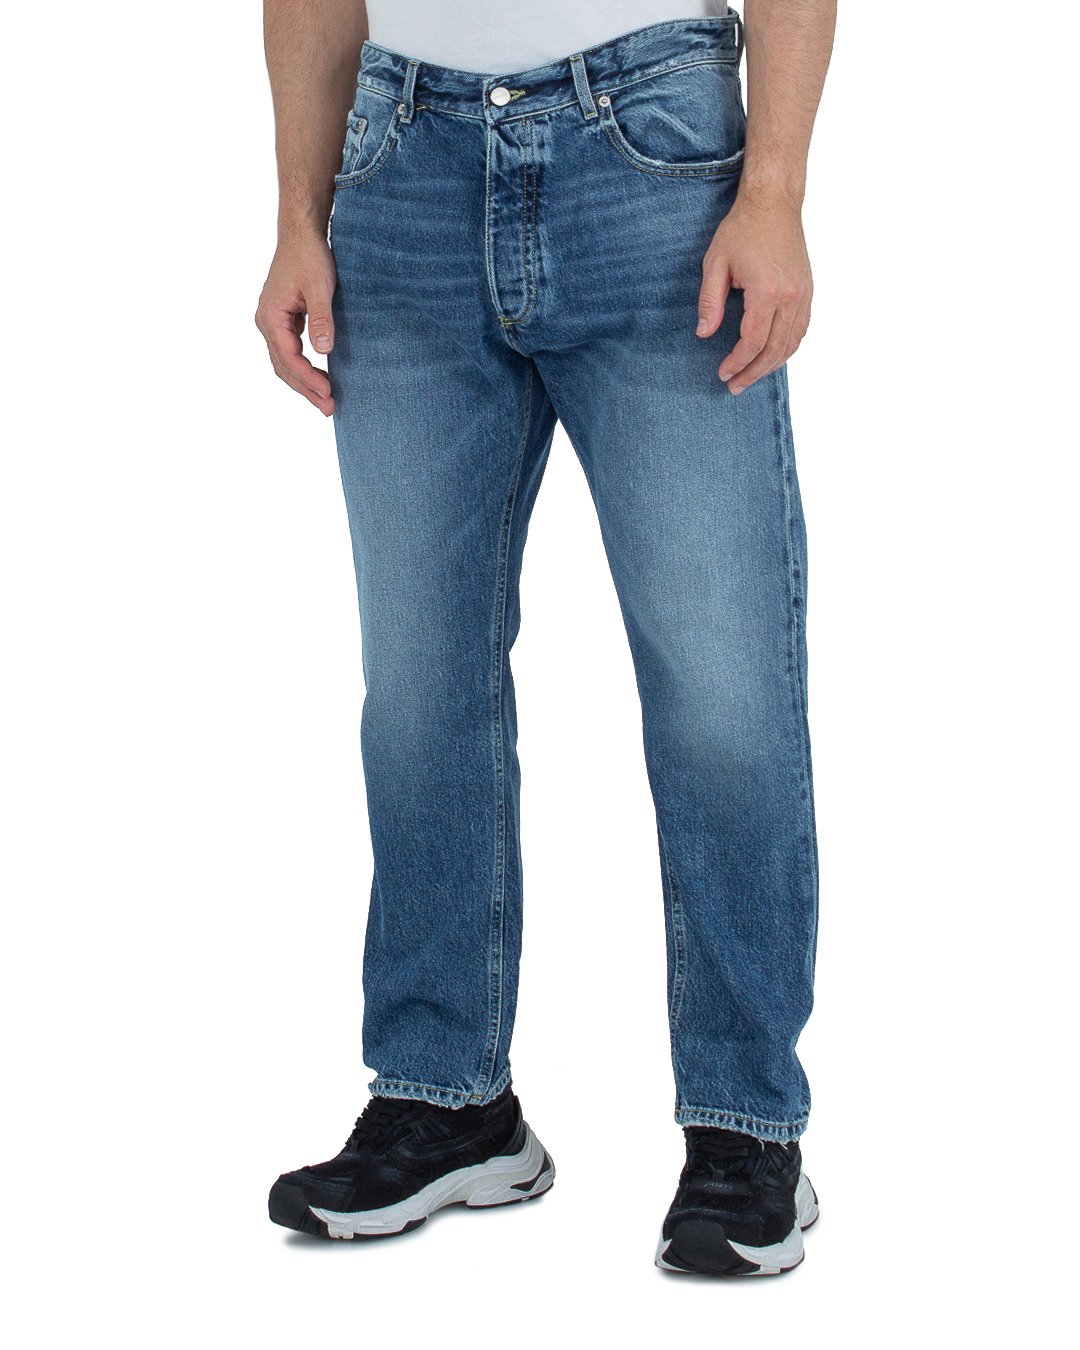 джинсы ICON DENIM JOSHID749 синий 38, размер 38 - фото 3